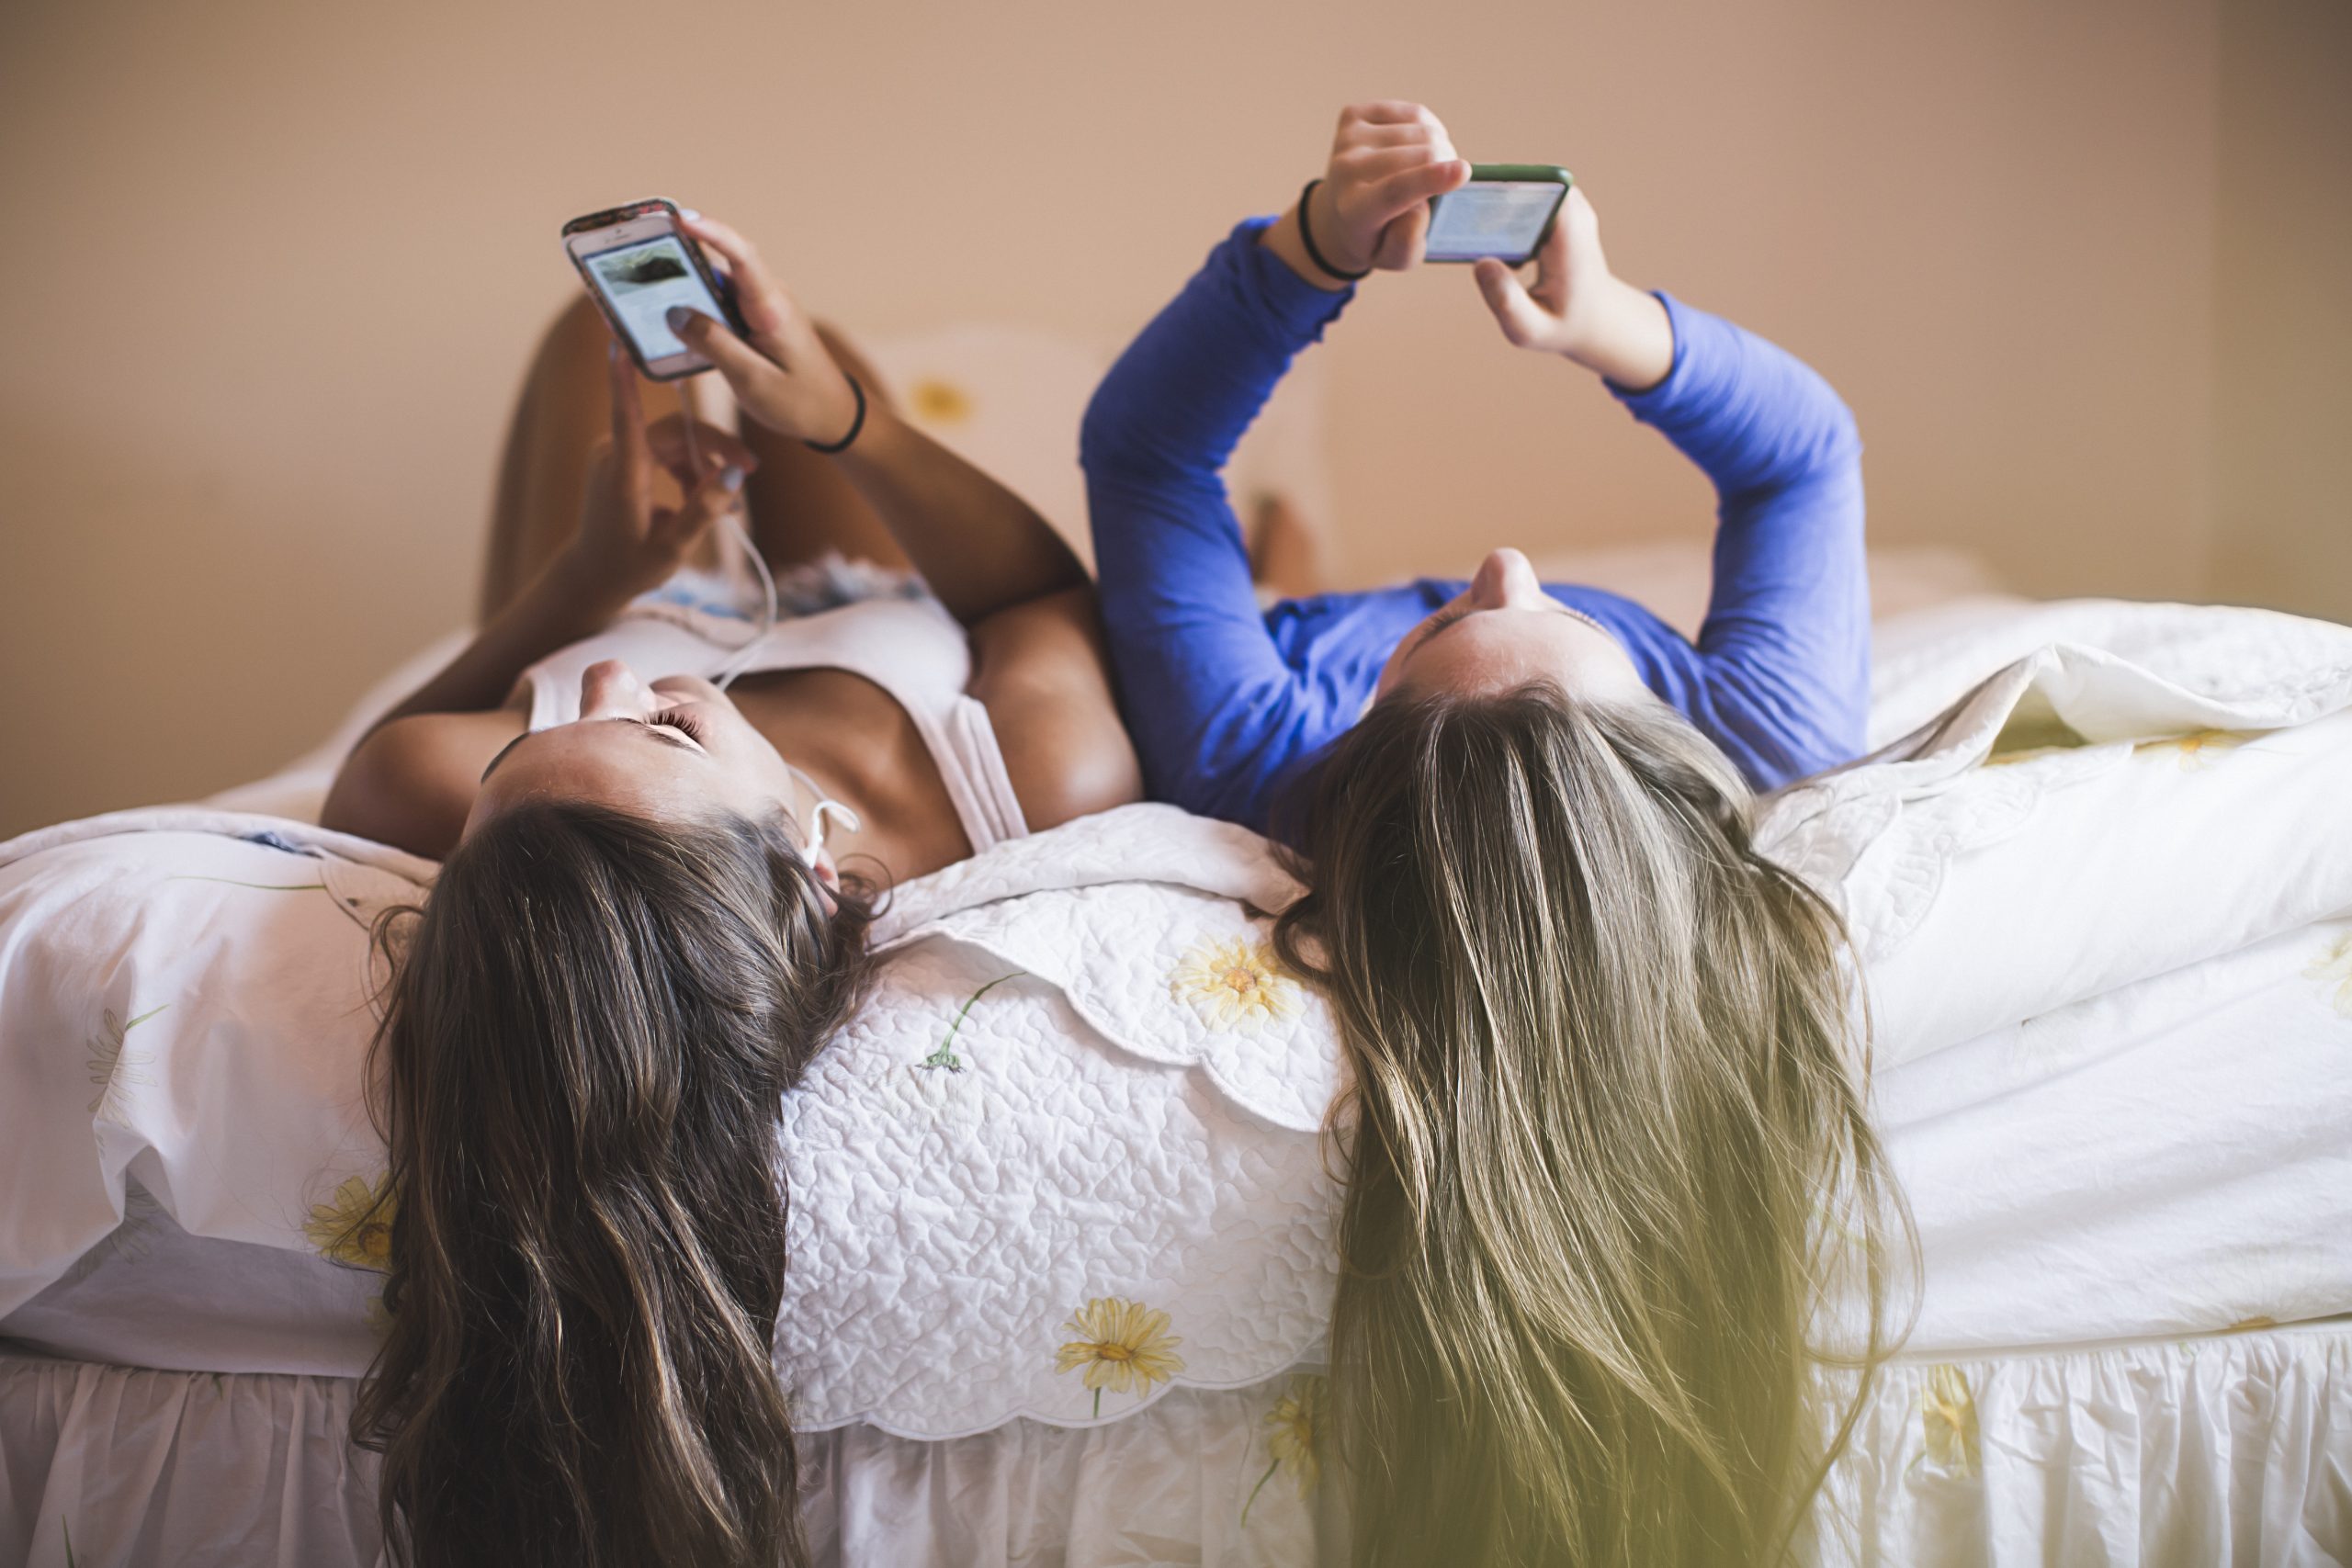 Teen Girls Spend More Time Online Than Teen Boys